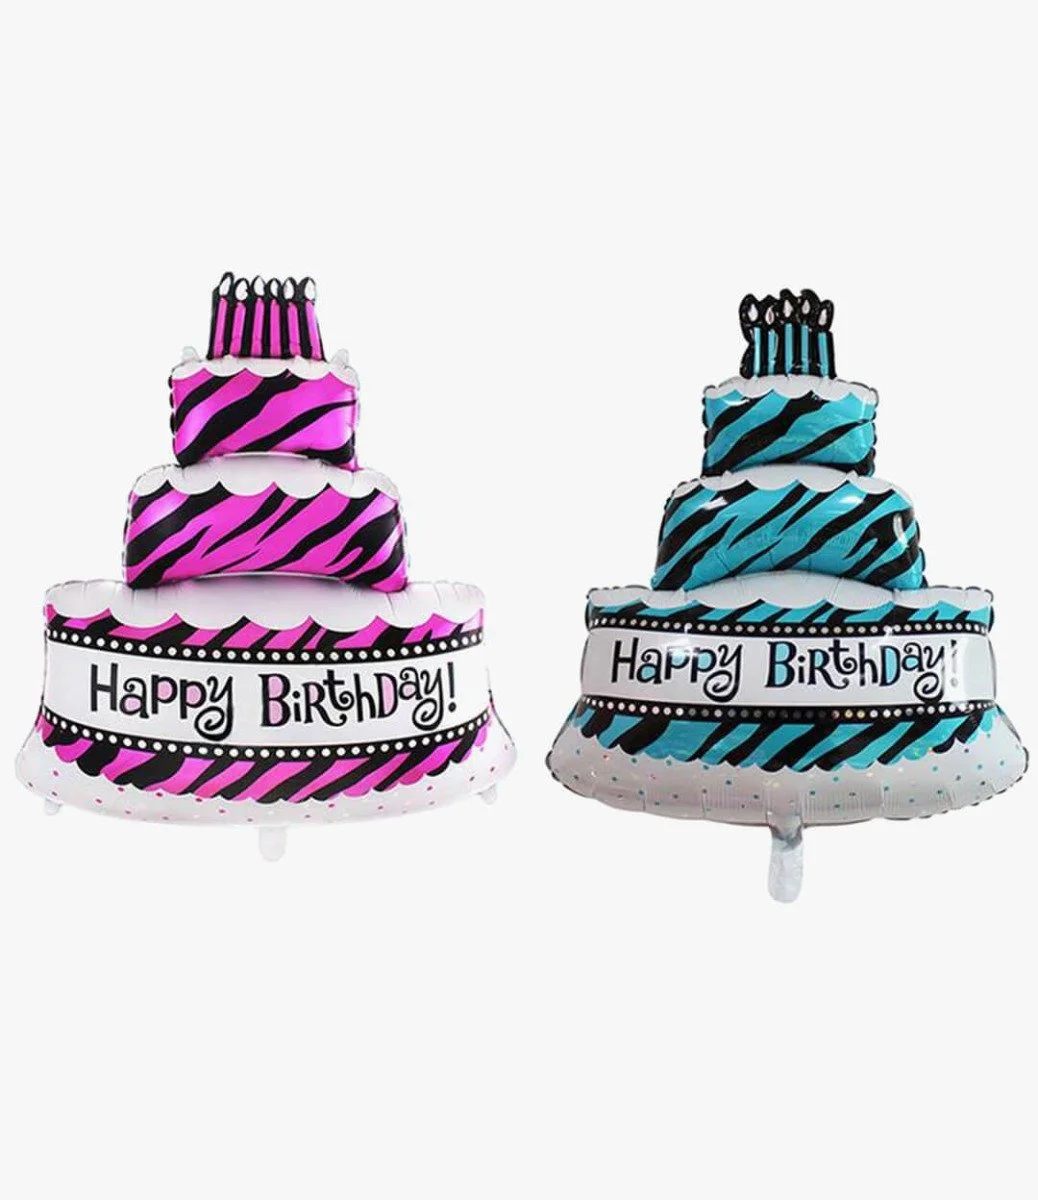 Happy Birthday Pink & Blue Multi-tiered Cake Helium Balloons